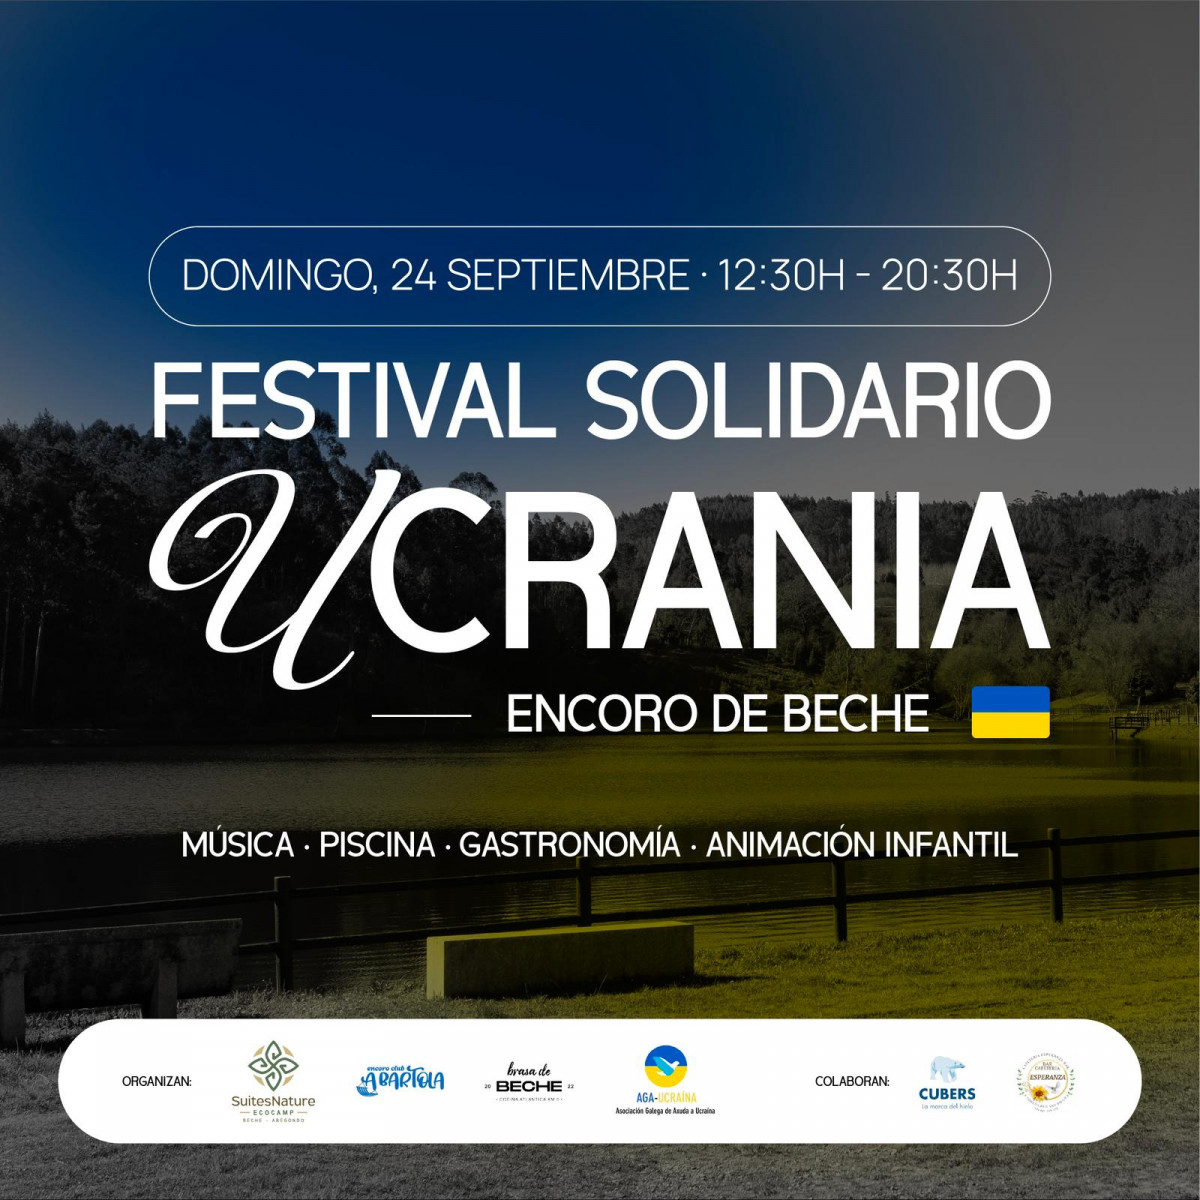 Festival solidario ucrania